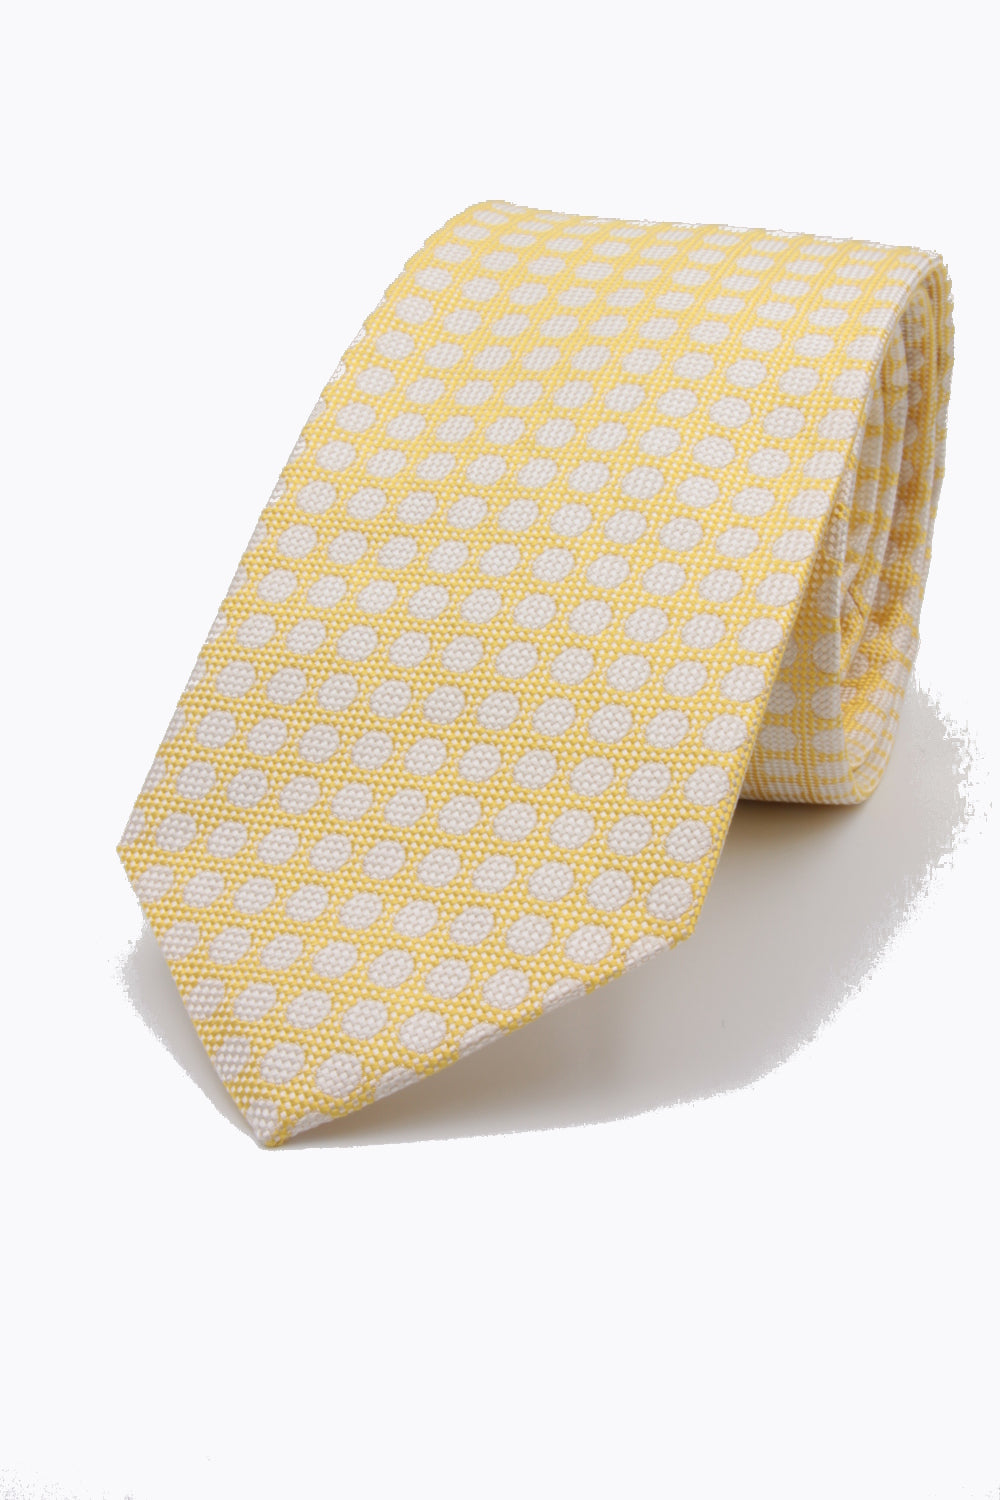 drake's Churchill's spot yellow and white tie